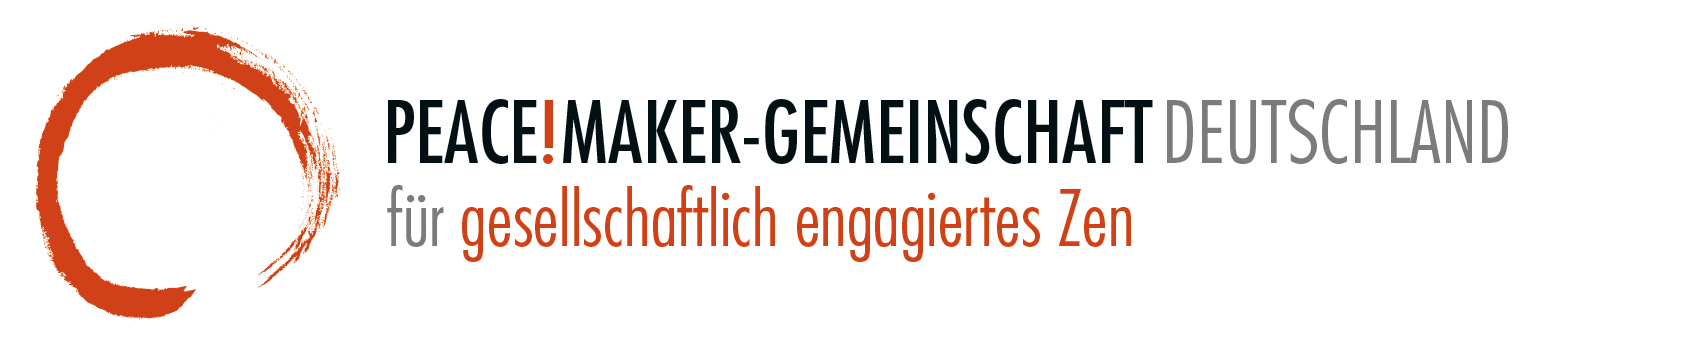 Peacemaker-Gemeinschaft Deutschland